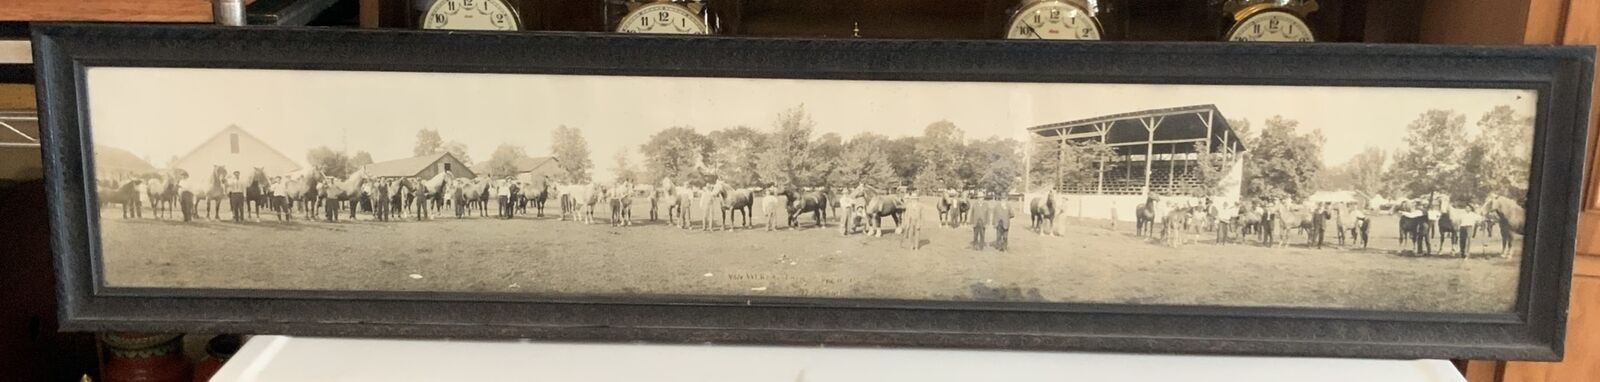 VINTAGE ANTIQUE 1914 PANORAMIC PHOTO VAN WERT COUNTRY FAIR OHIO HORSE SHOW